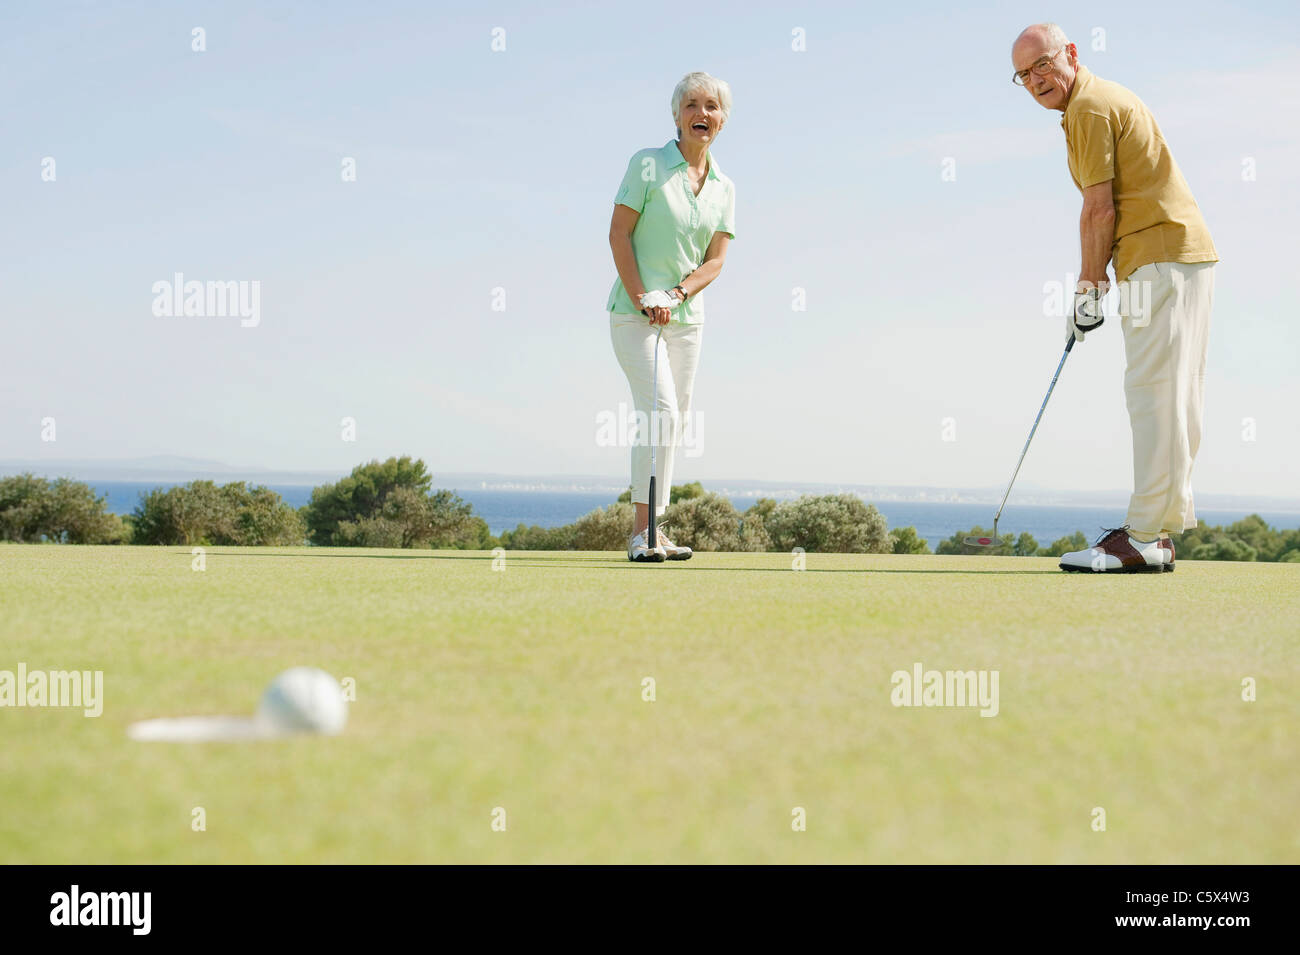 Spagna, Mallorca, coppia Senior giocando a golf Foto Stock